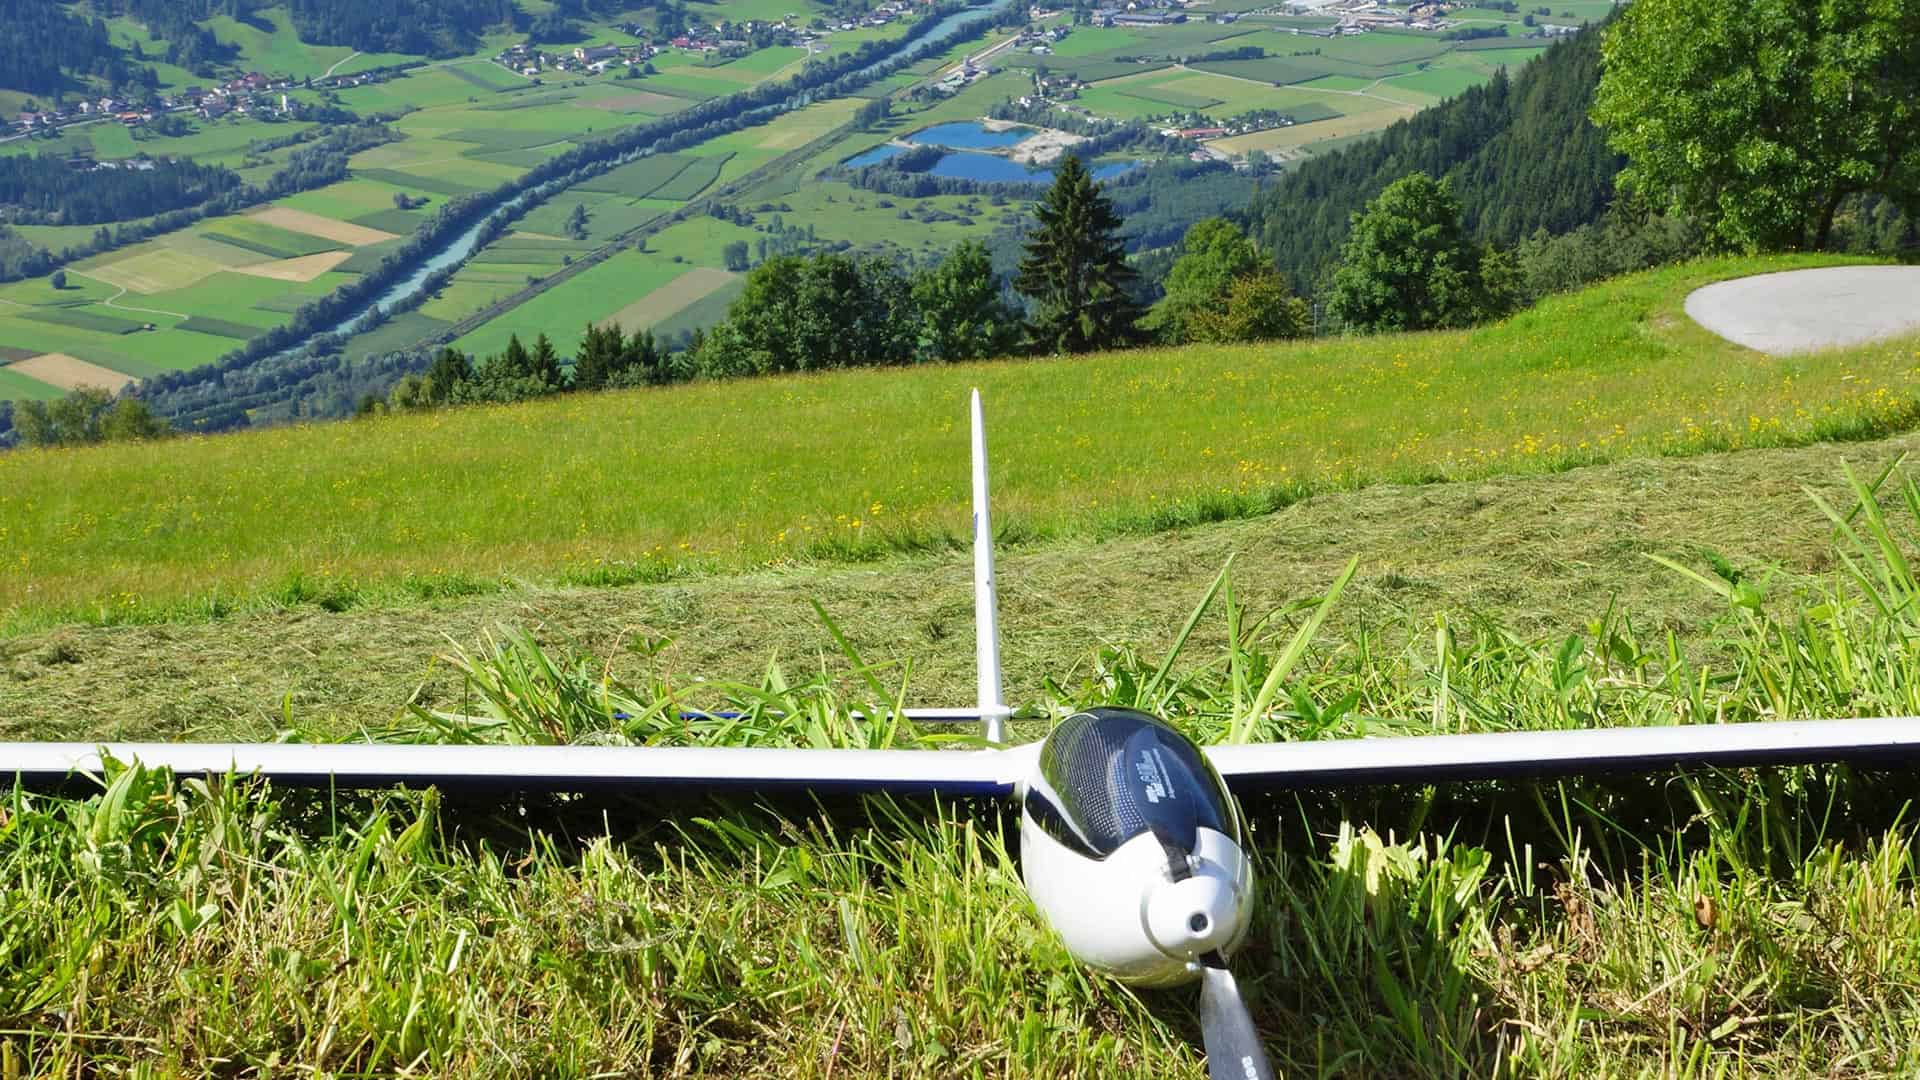 Hotel Glocknerhof in Austria – holidays for RC model flying